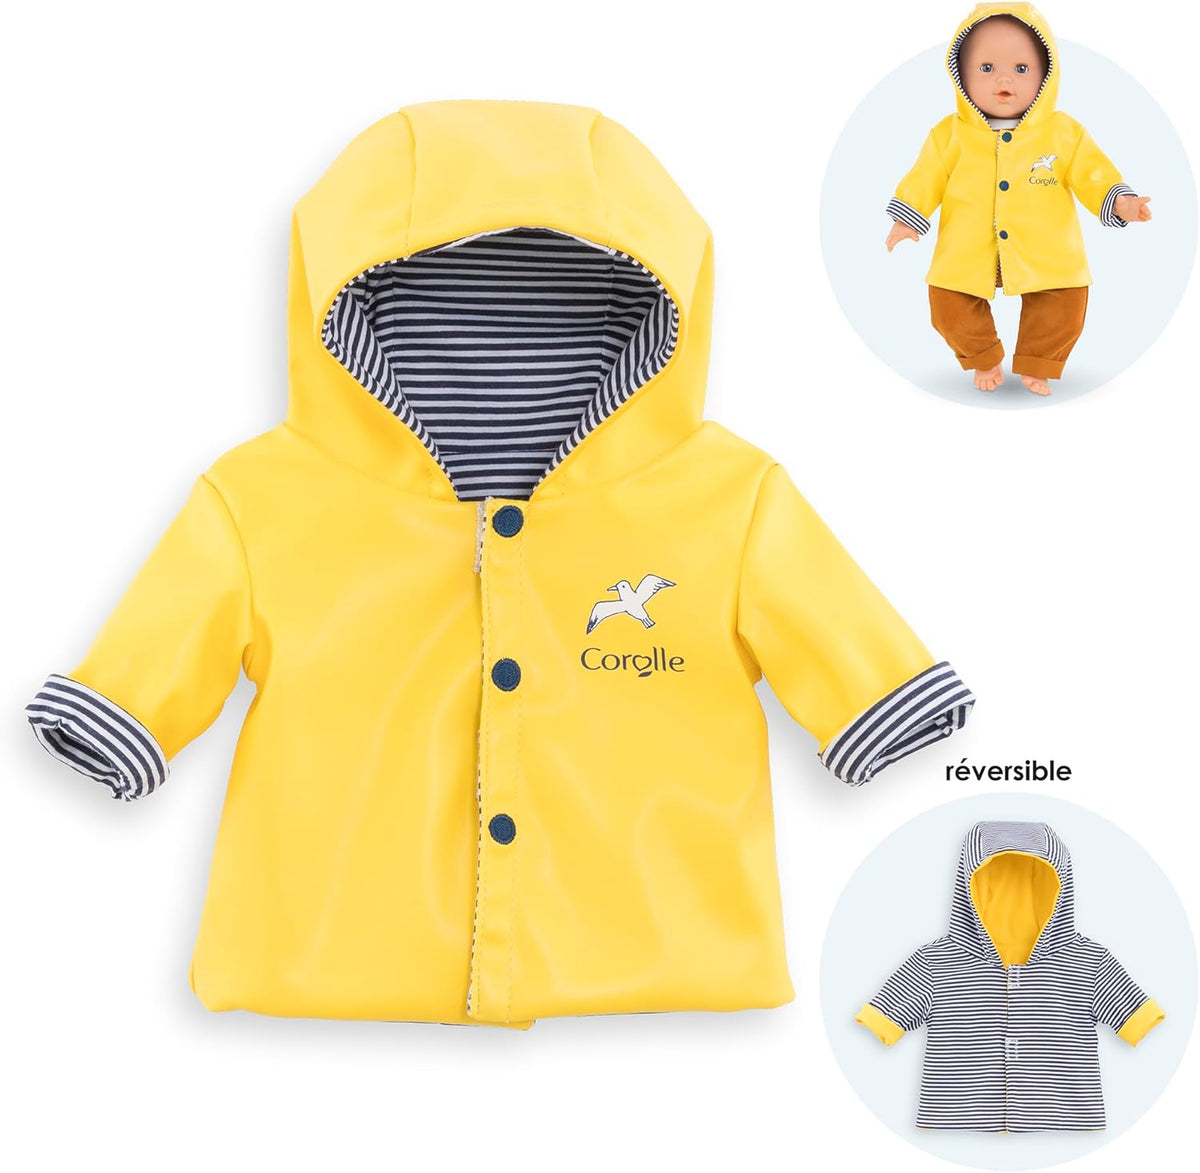 14” Doll Clothes - Reversible Raincoat